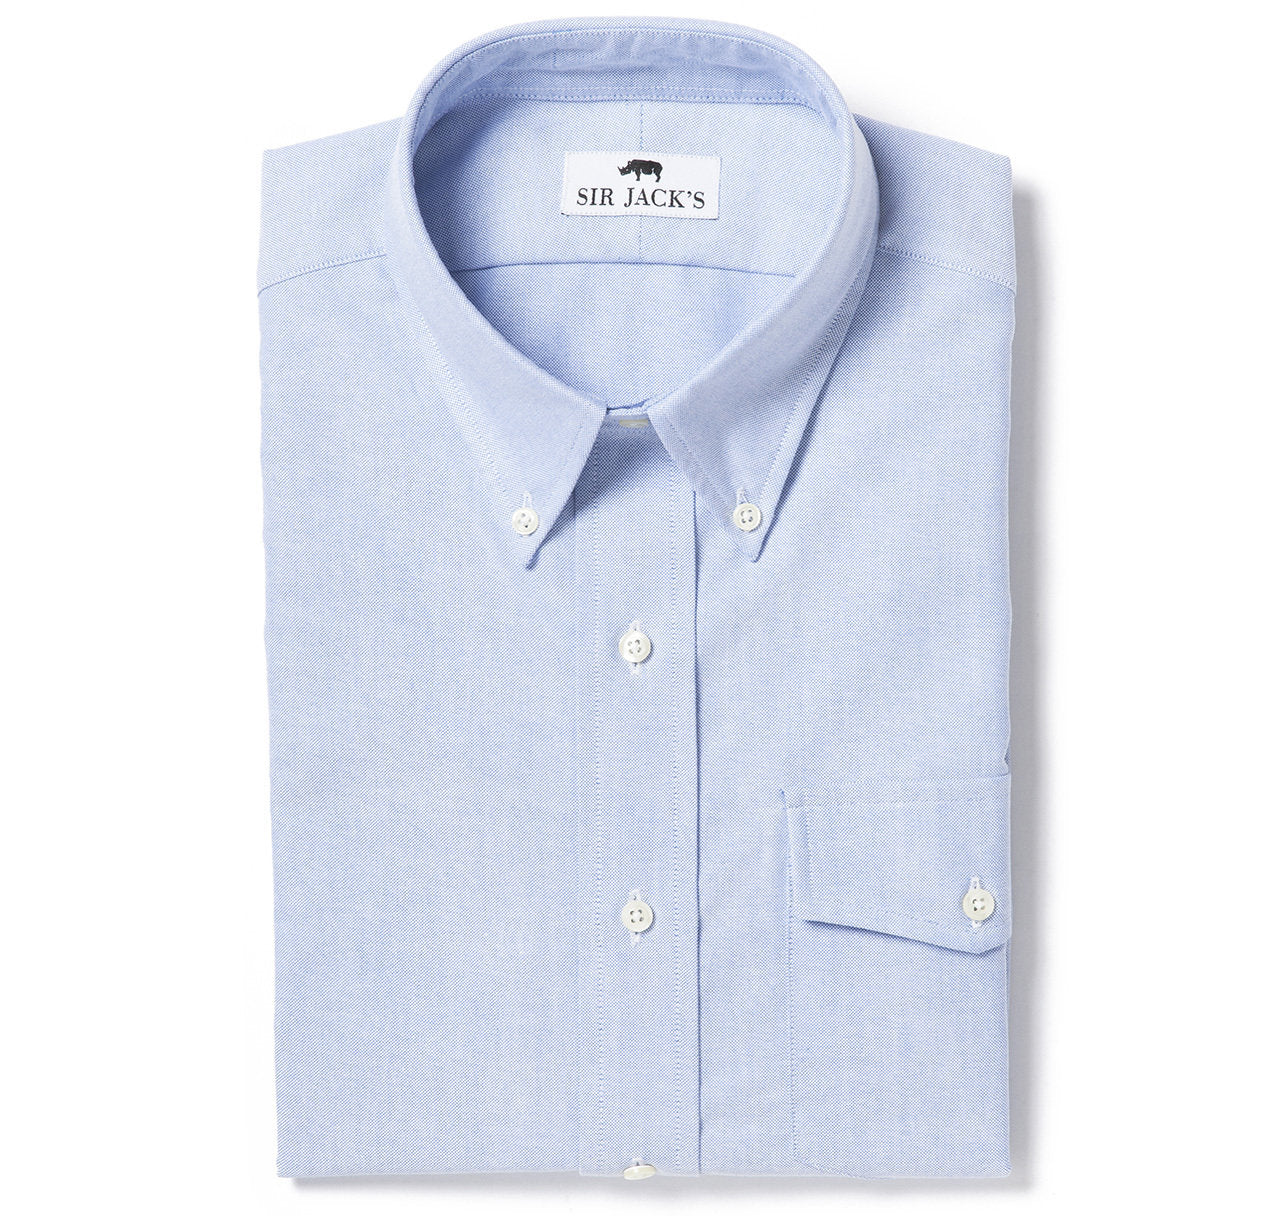 Sudbury Oxford Pocket Shirt in Blu